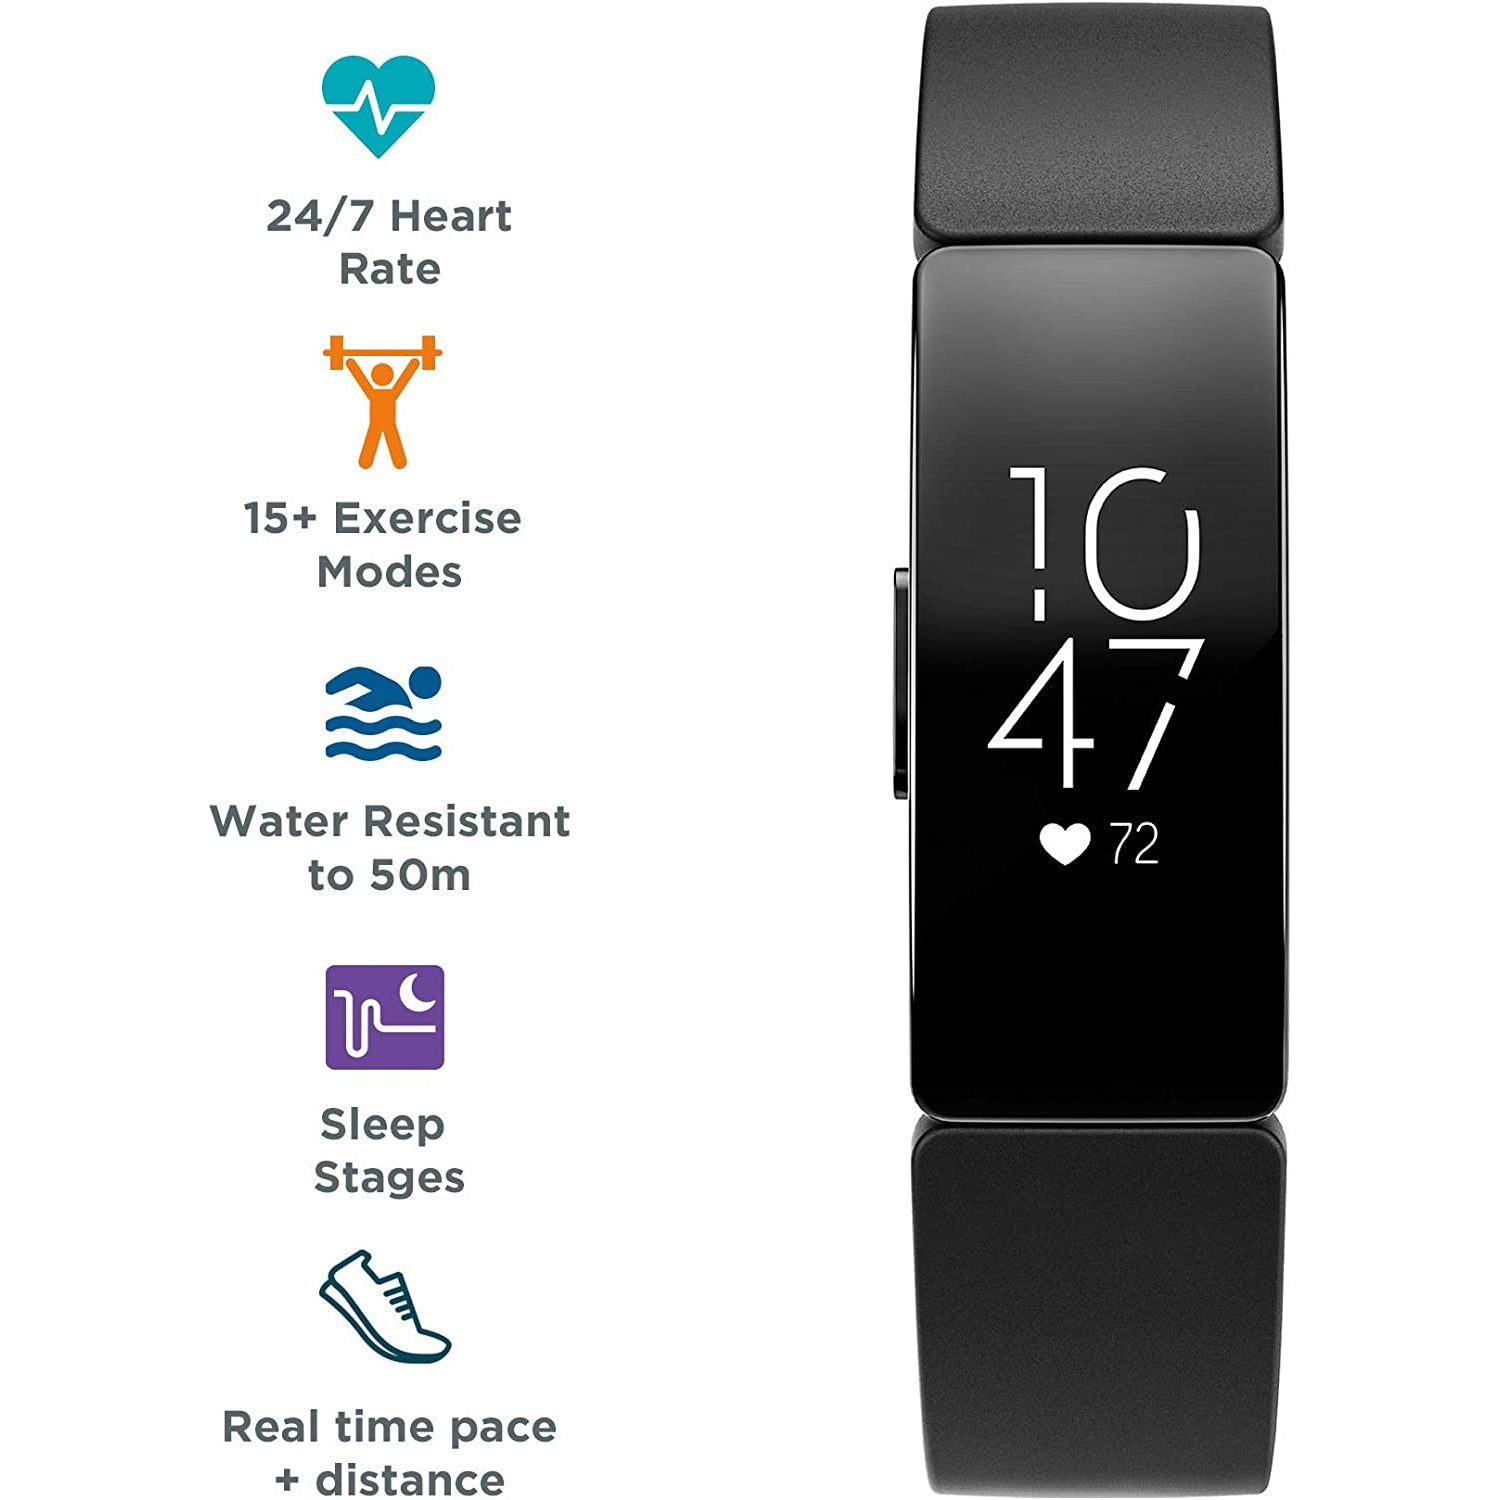 Fitbit Inspire HR Health & Fitness Tracker - Black - Refurbished Good